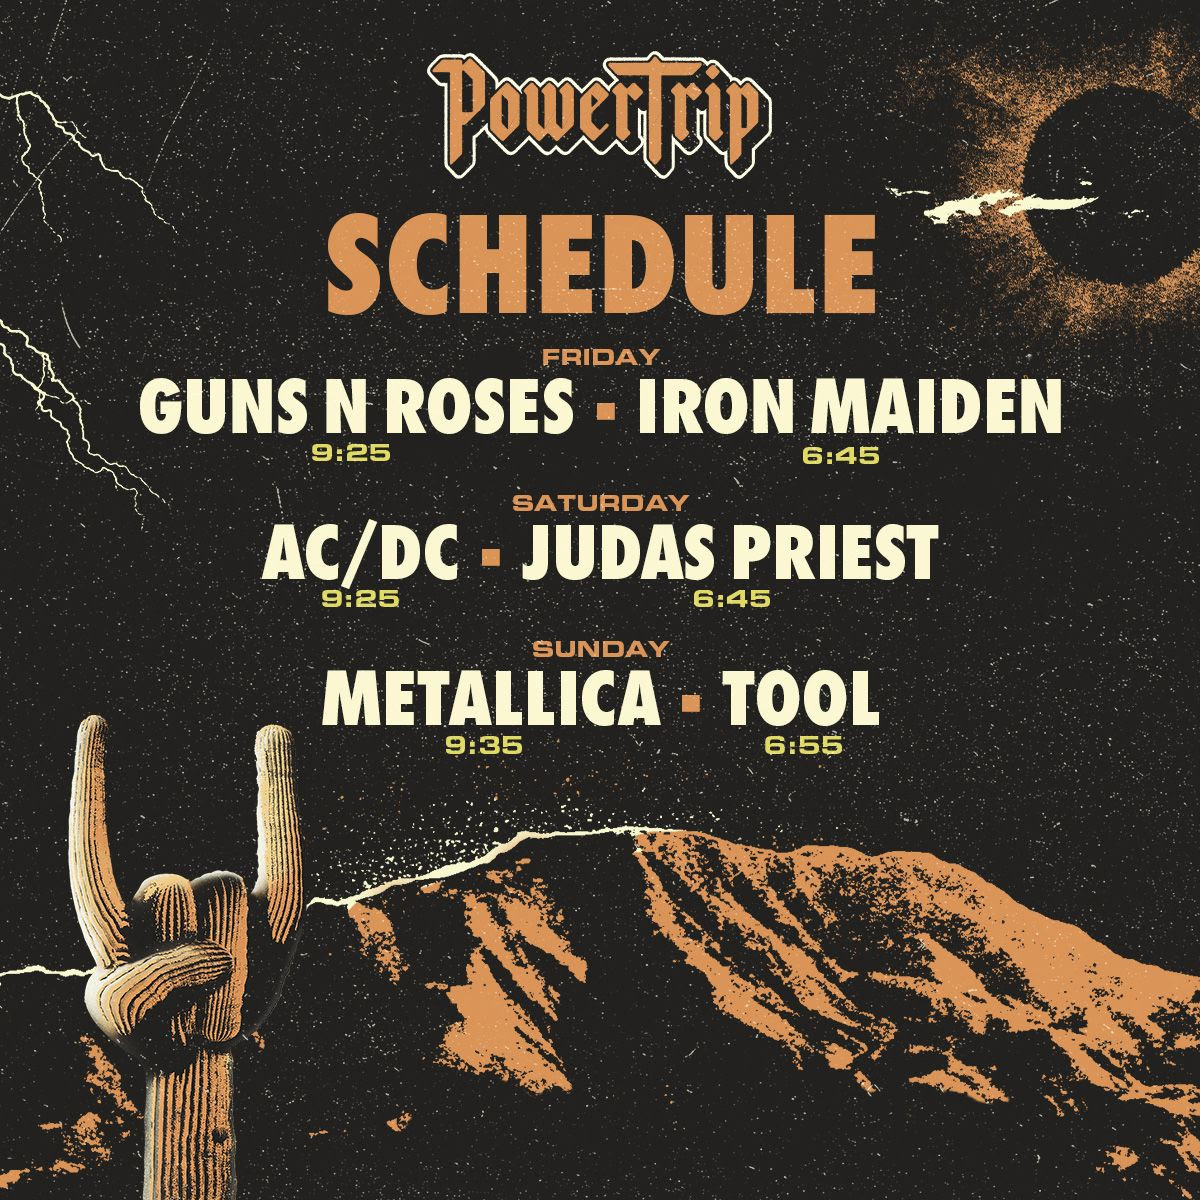 Judas Priest announces North American tour, including 7 Canadian dates